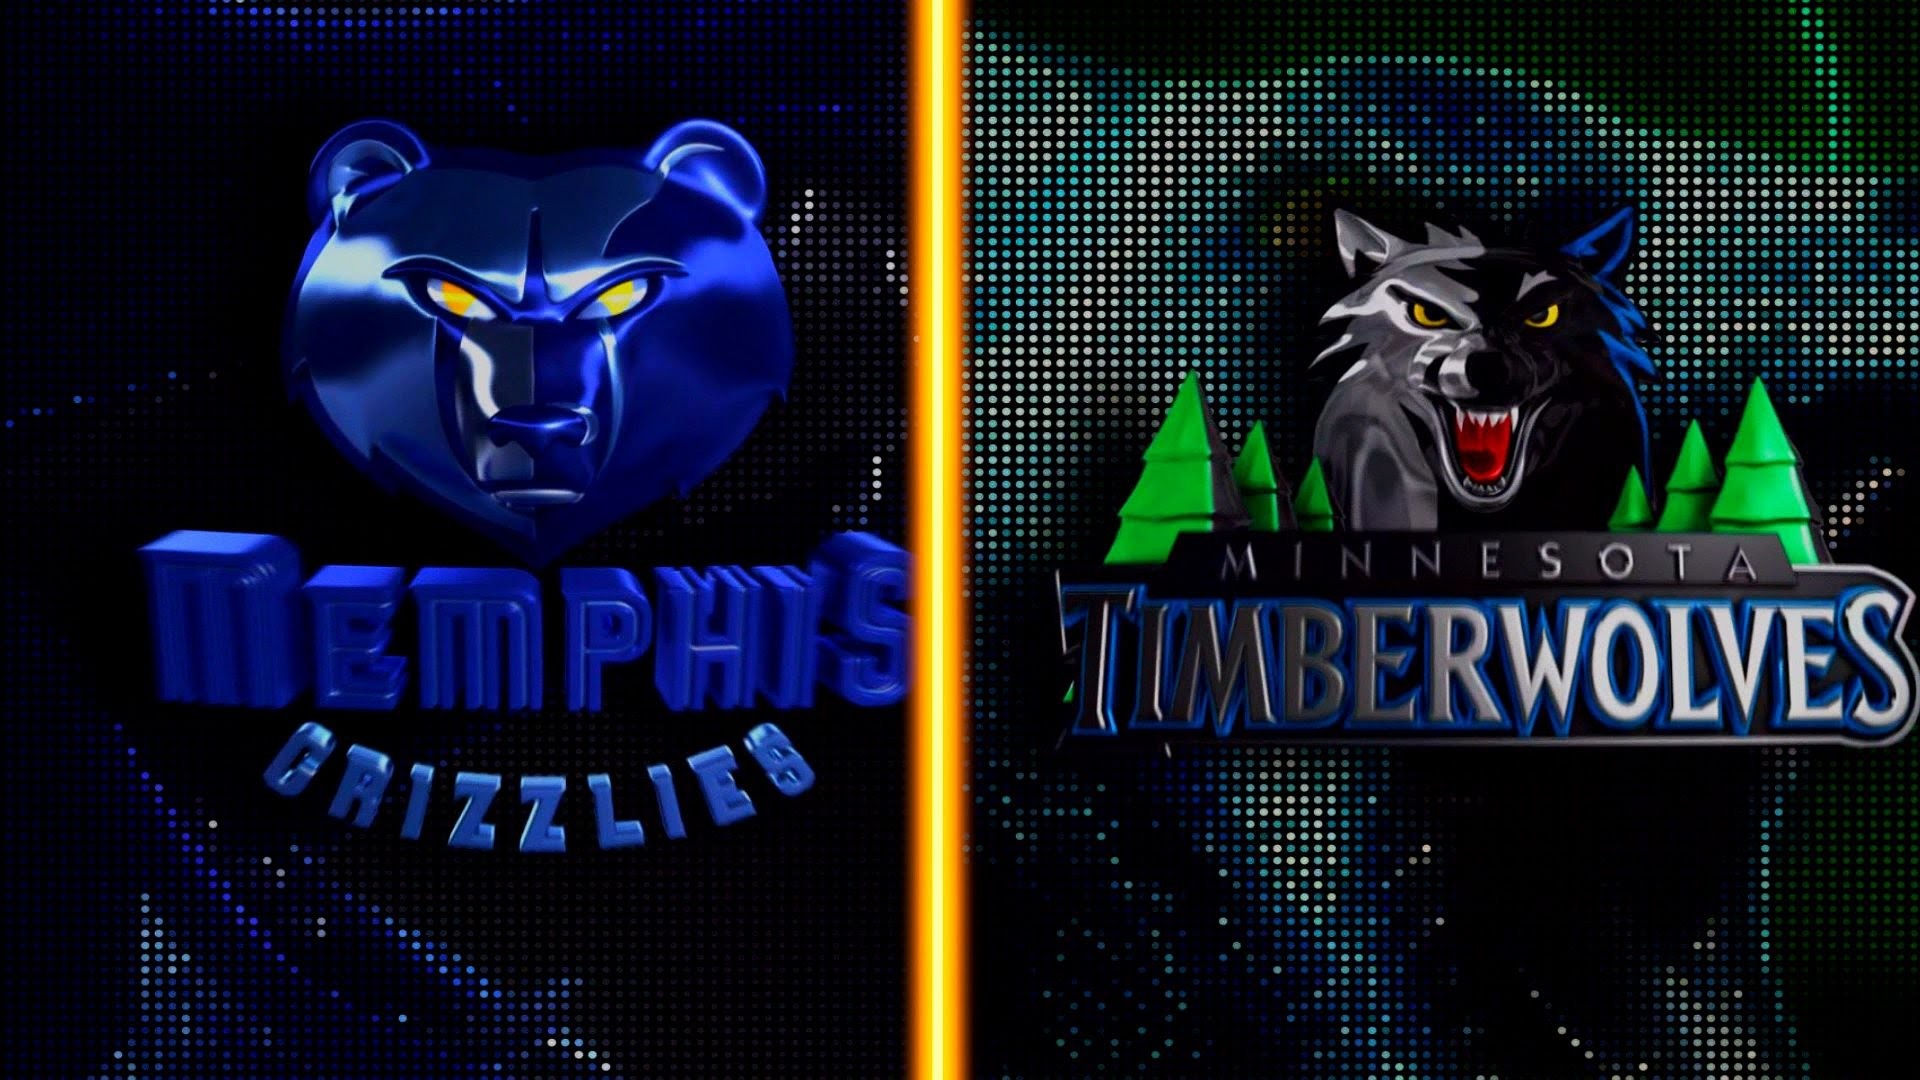 1920x1080 PS4: NBA 2K16 - Memphis Grizzlies vs. Minnesota Timberwolves [1080p 60 FPS]  - YouTube